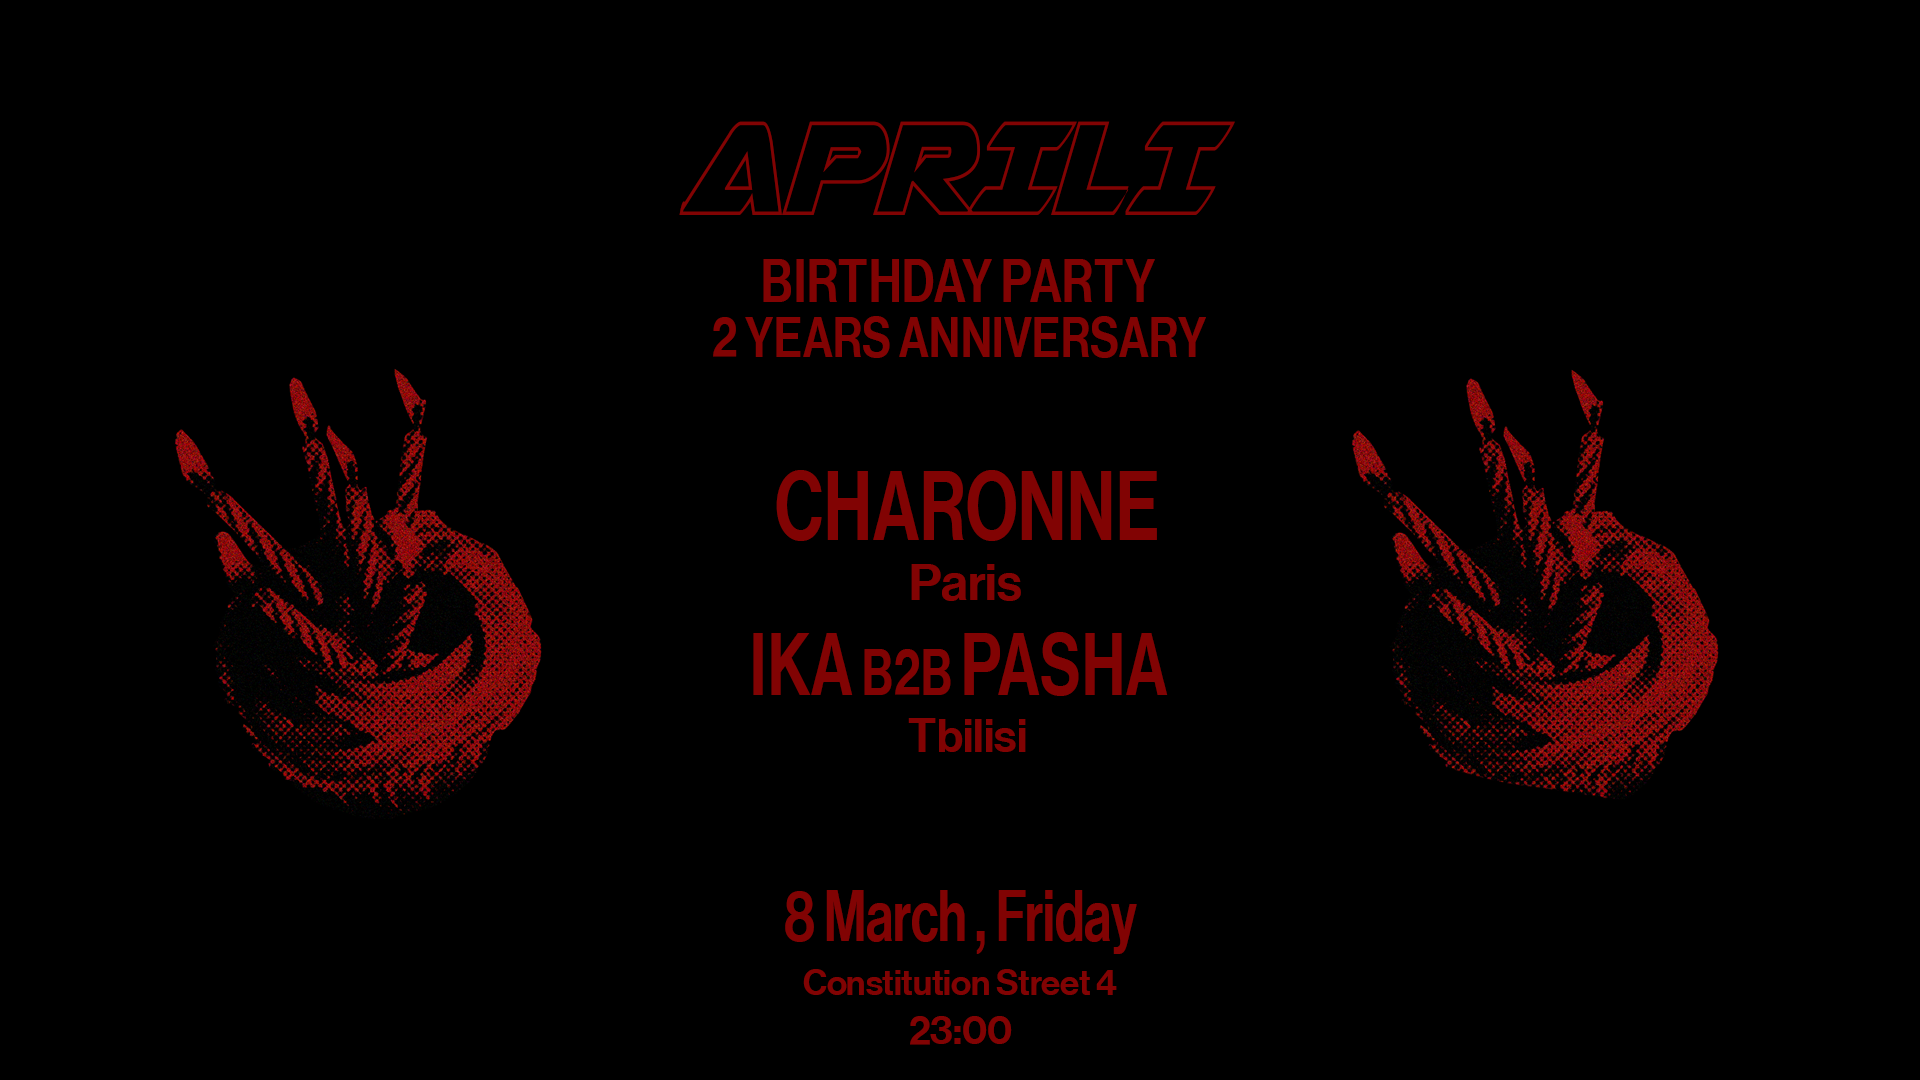 Aprili-Birthday Party Charonne/Ika b2b Pasha - フライヤー表